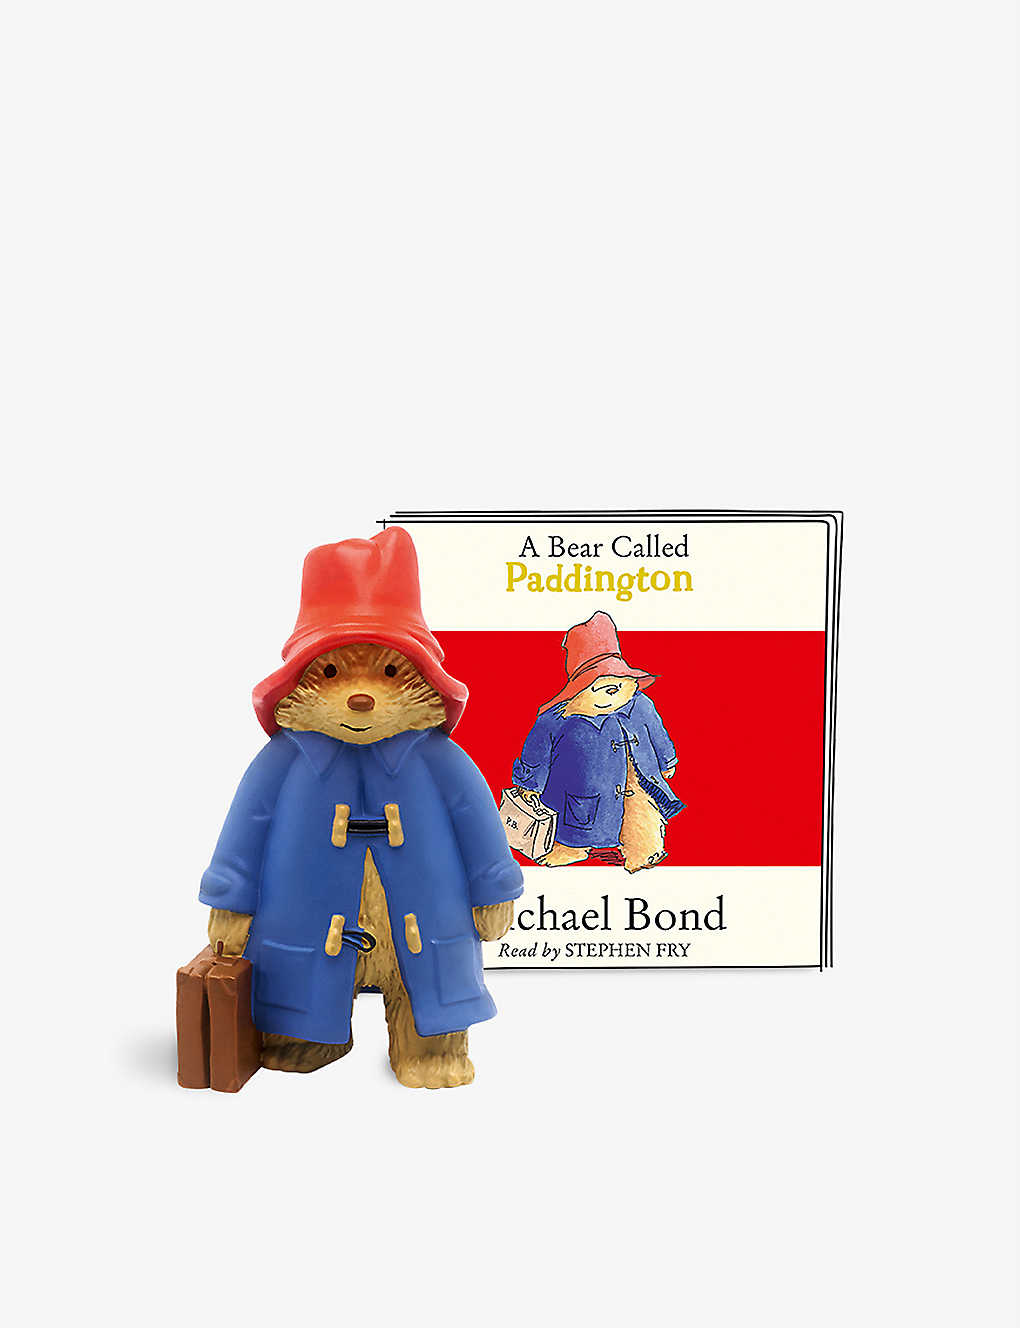 TONIES A Bear Called Paddington audiobook toy